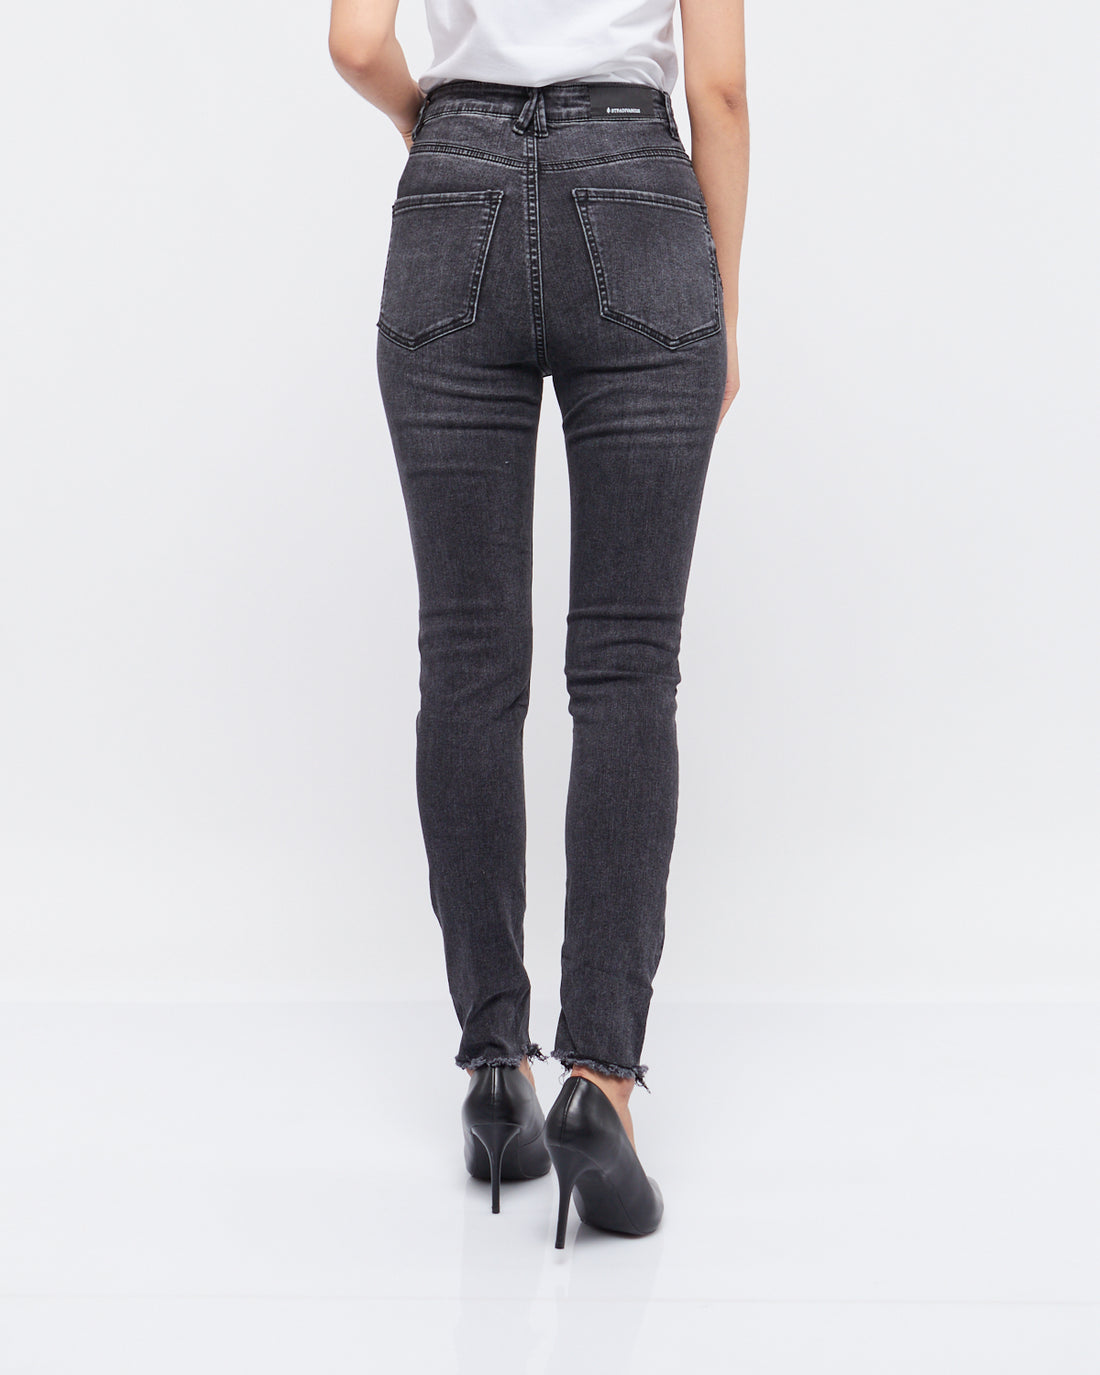 High Waist Slim Fit Lady Jeans  16.90